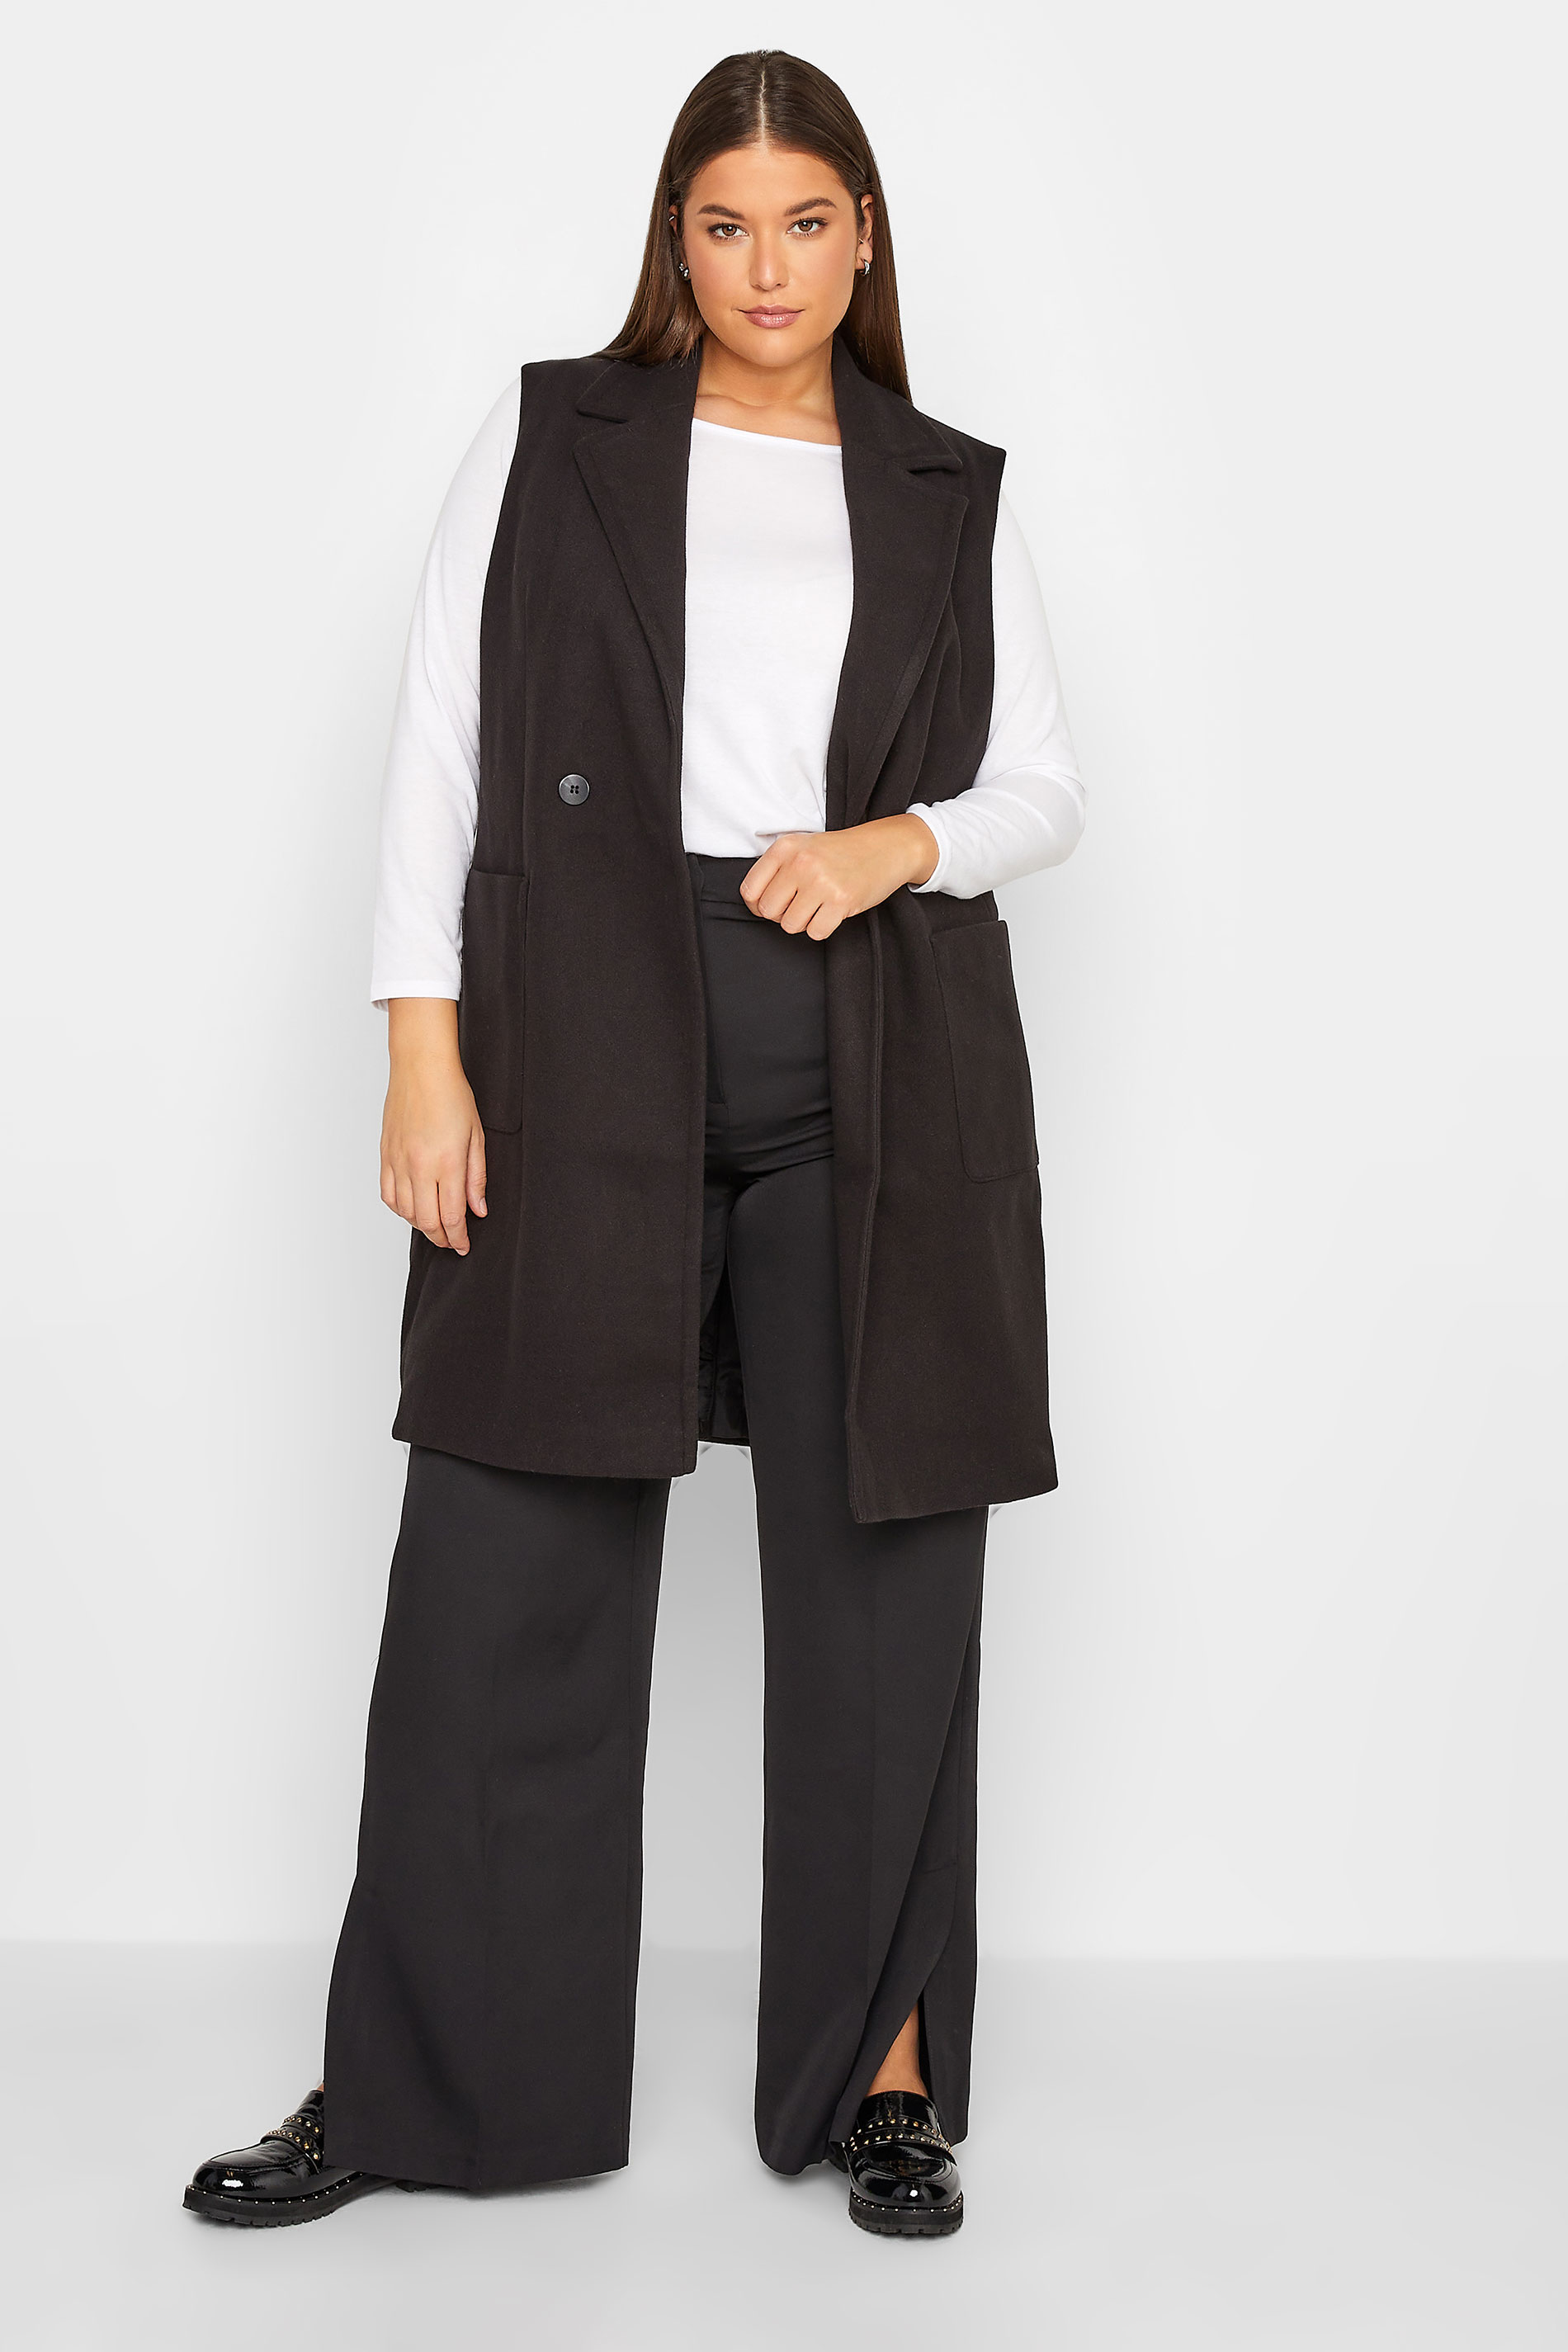 LTS Tall Women's Black Sleeveless Double Breasted Jacket | Long Tall Sally 1